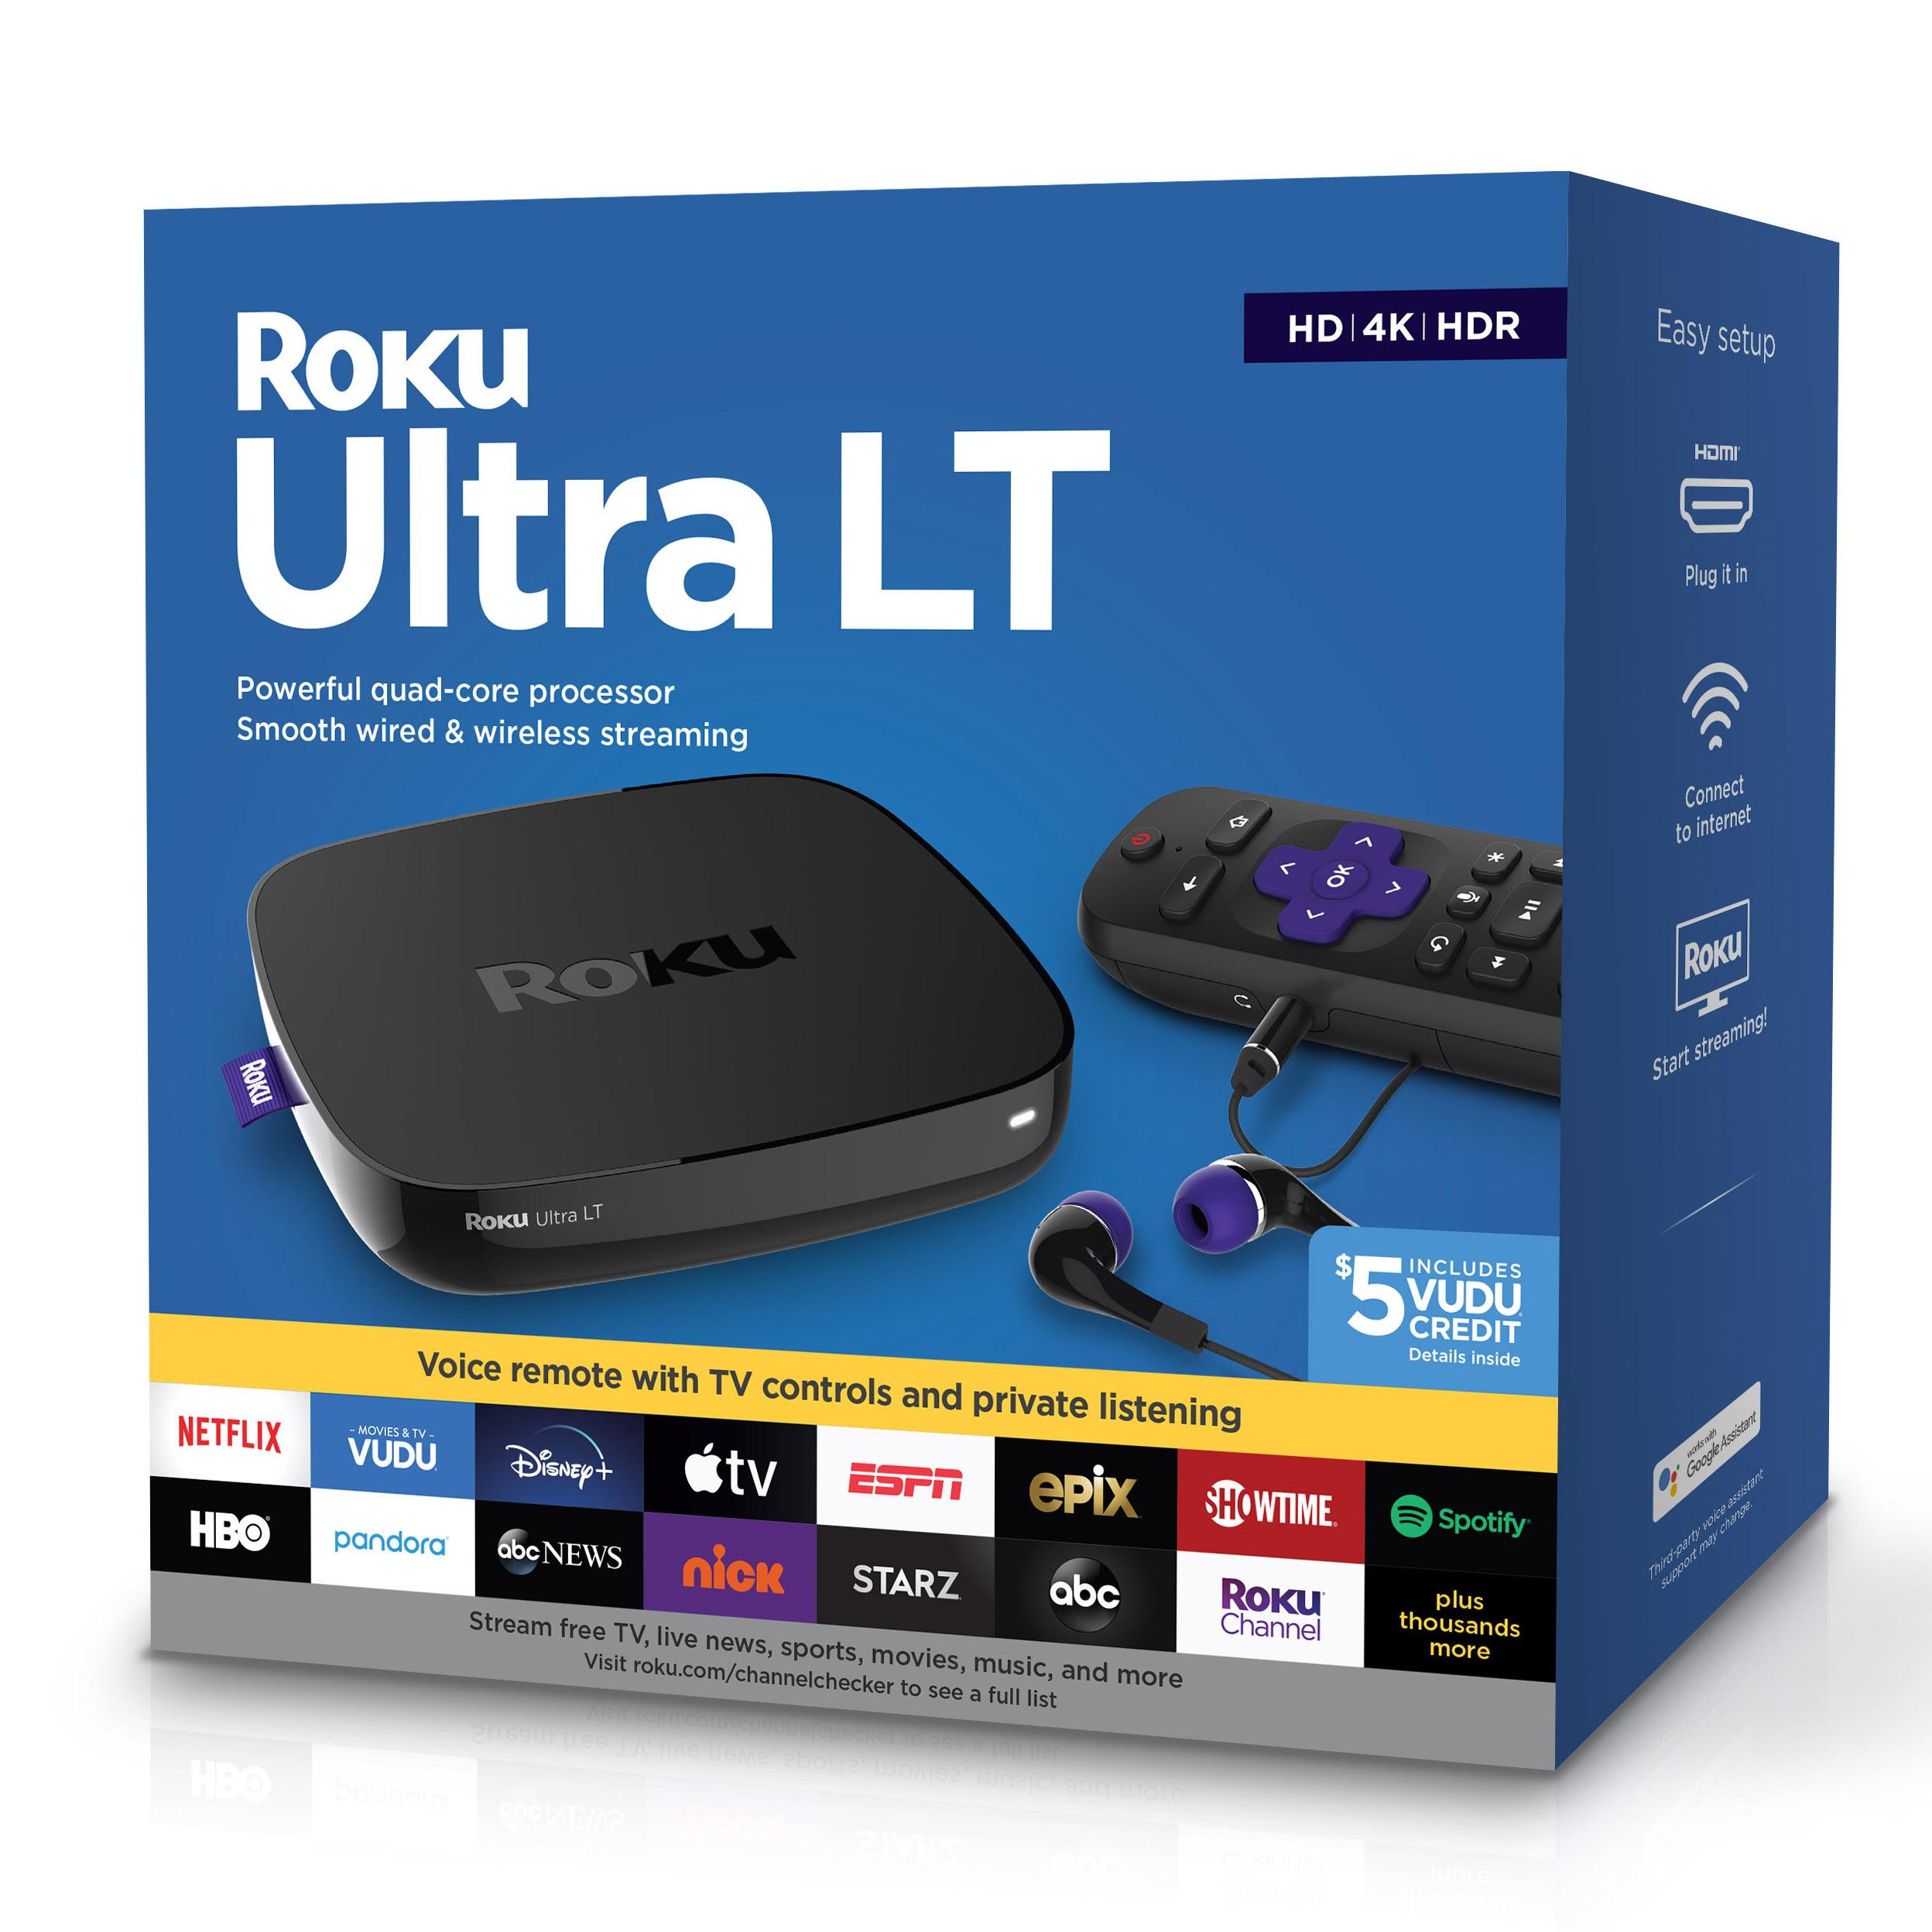 Roku Ultra LT 4K HDR Streaming Media Player for $48 Shipped